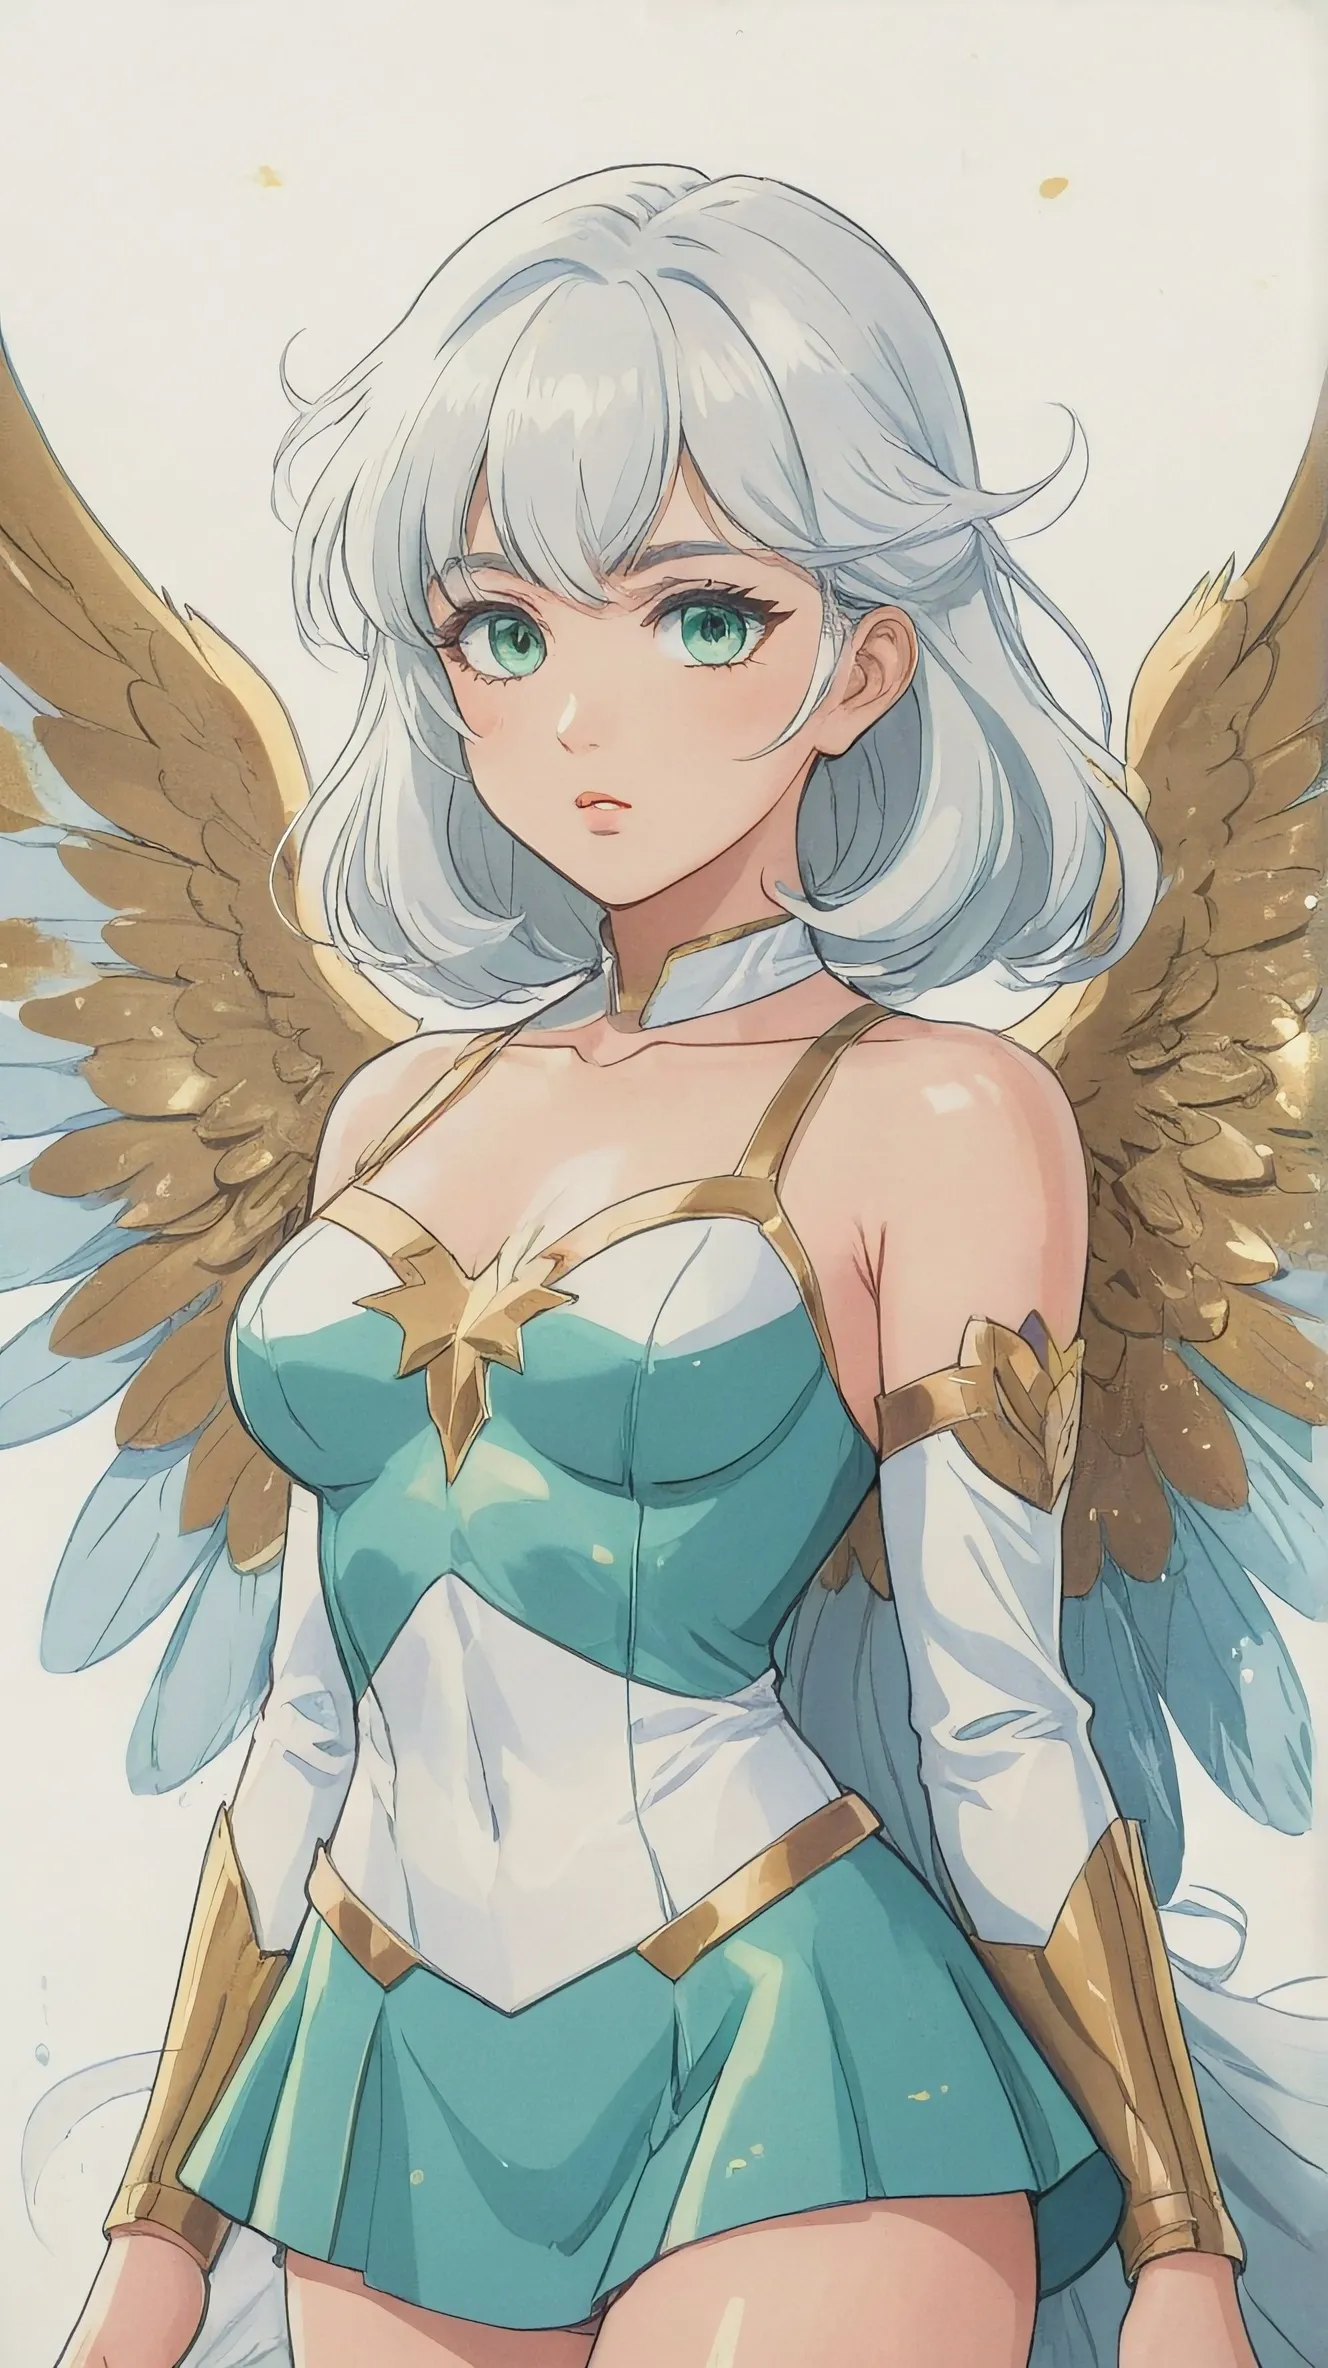 Superhero girl, angel wings, white and gold aesthetic, white hair, one blue eye, one green eye